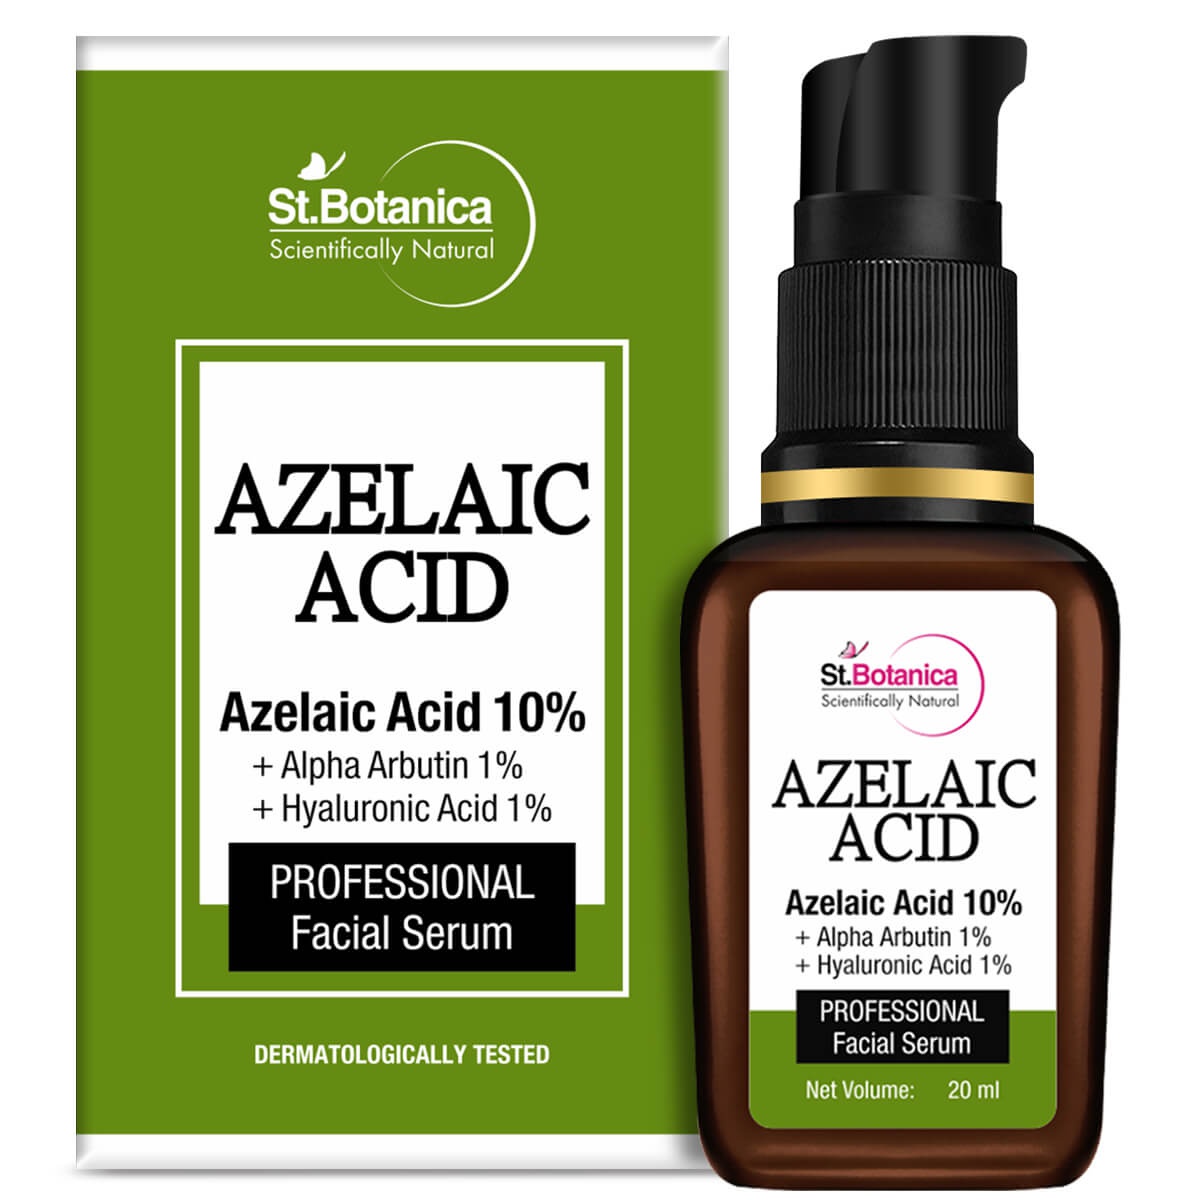 St. Botanica Azelaic Acid